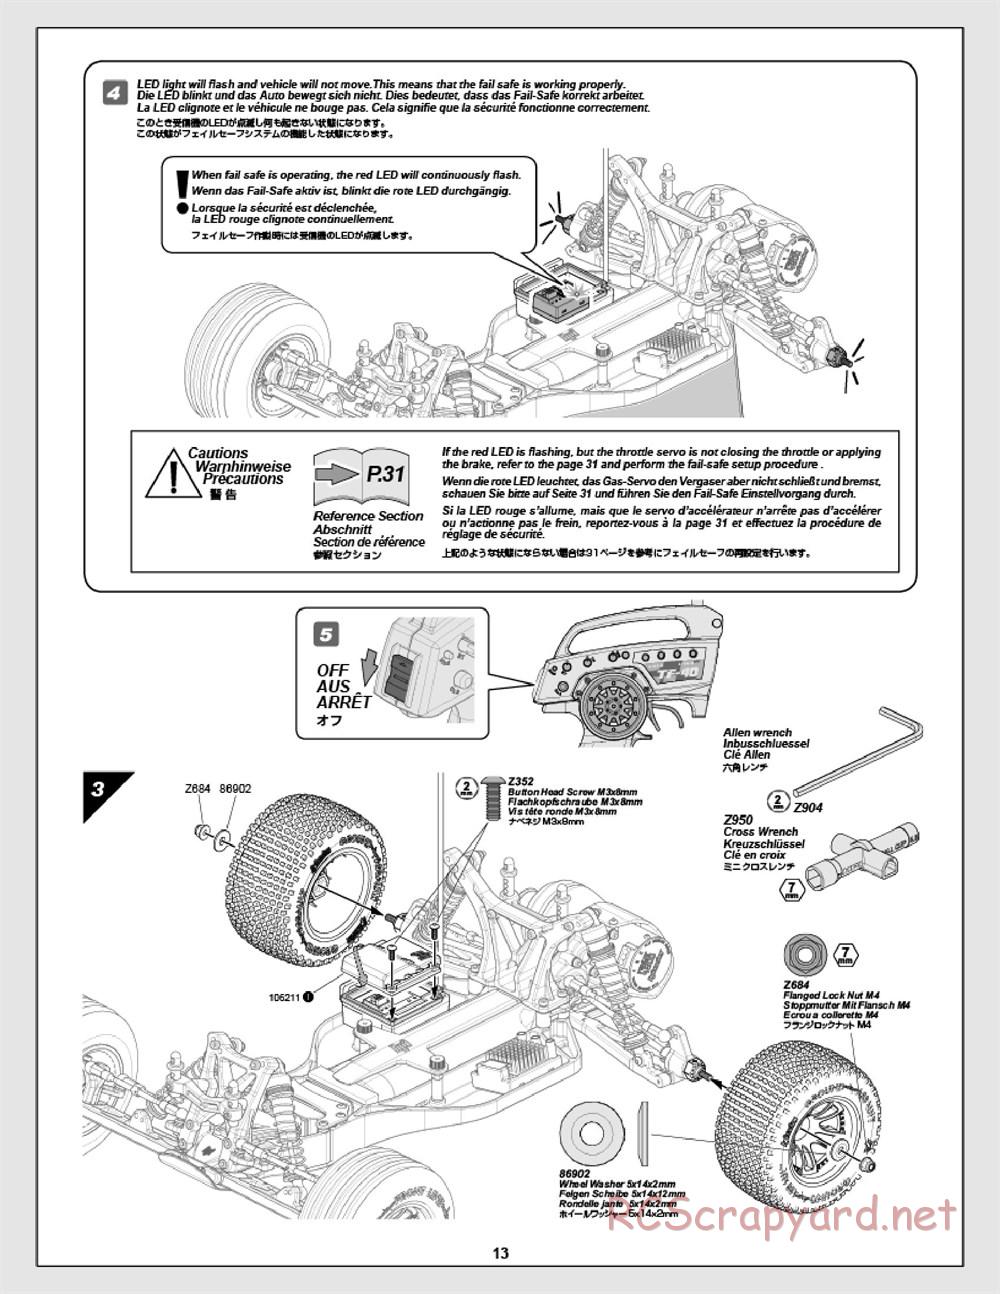 HPI - E-Firestorm 10T Flux - Manual - Page 13